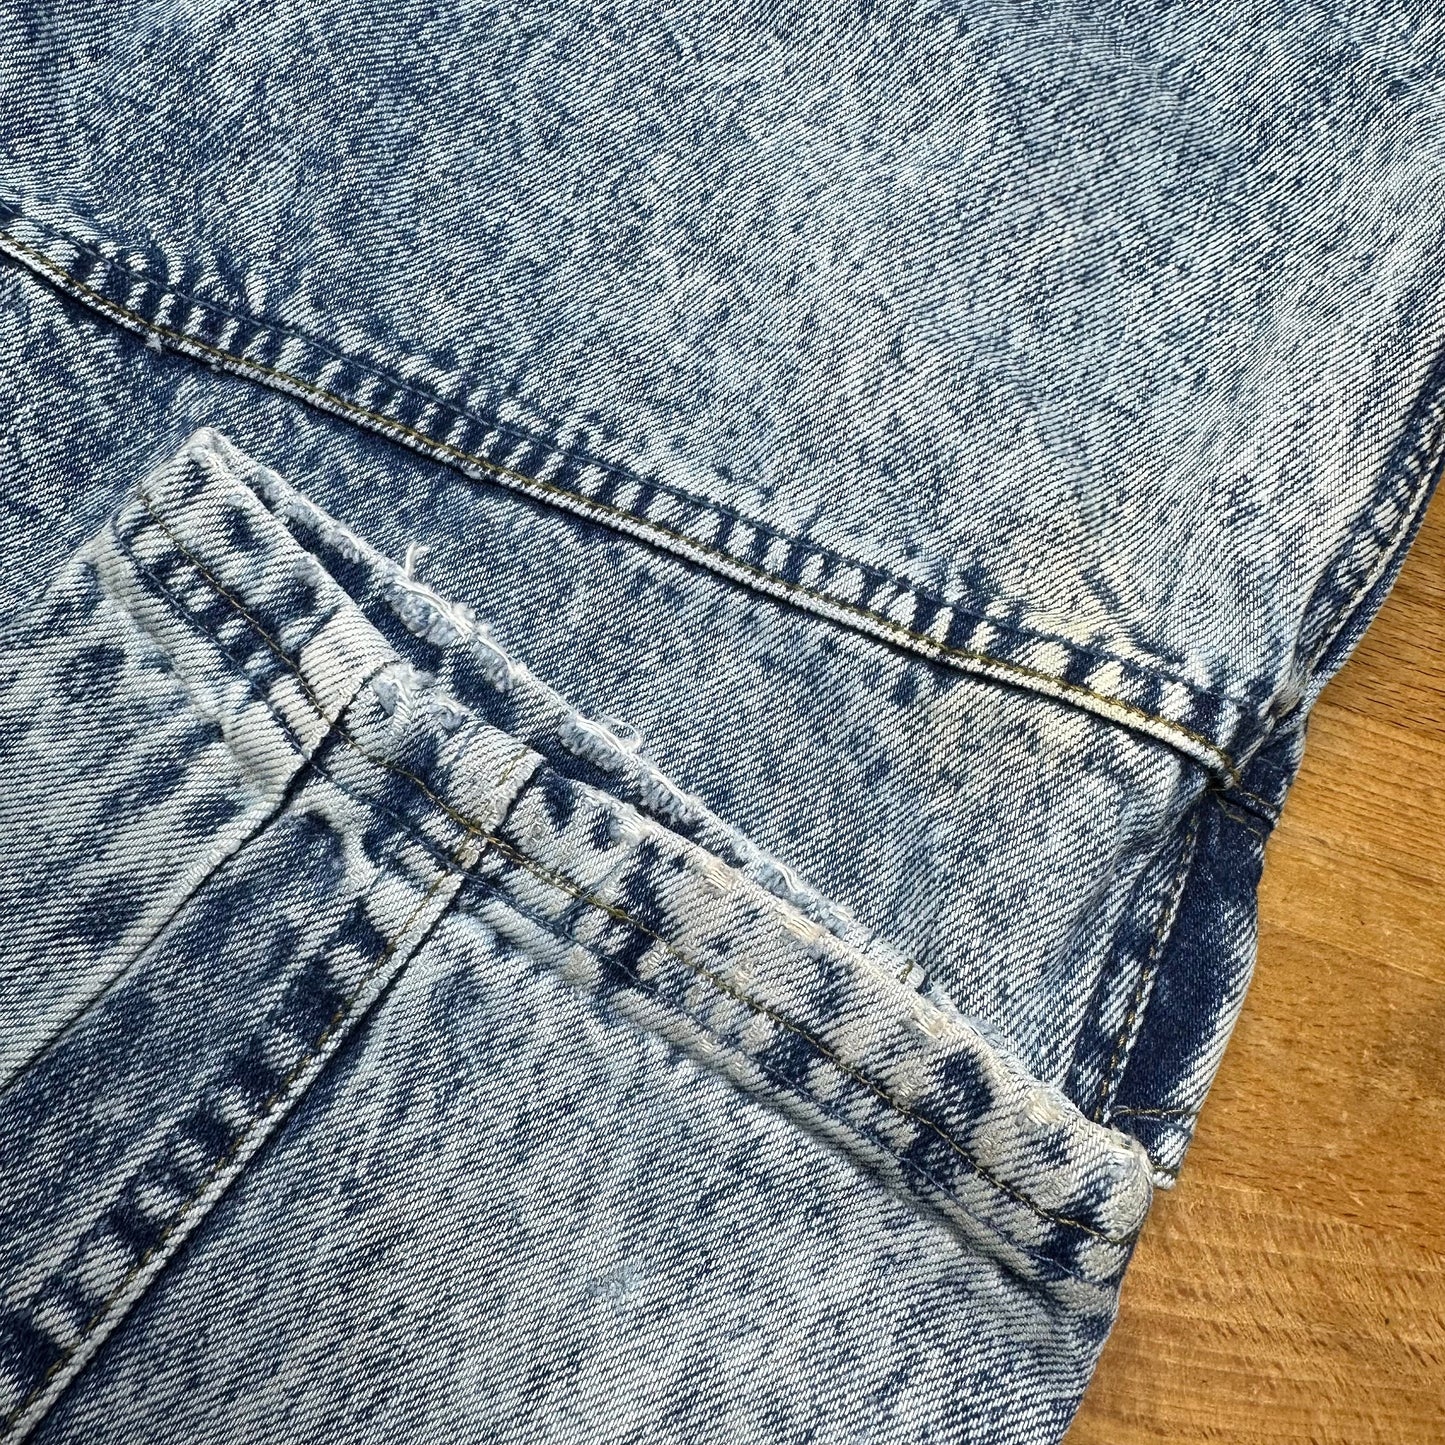 80s Acid Wash Denim Cargo Jeans - Medium, 29" | Vintage Bugle Boy Grunge Tapered High Waisted Mom Jeans